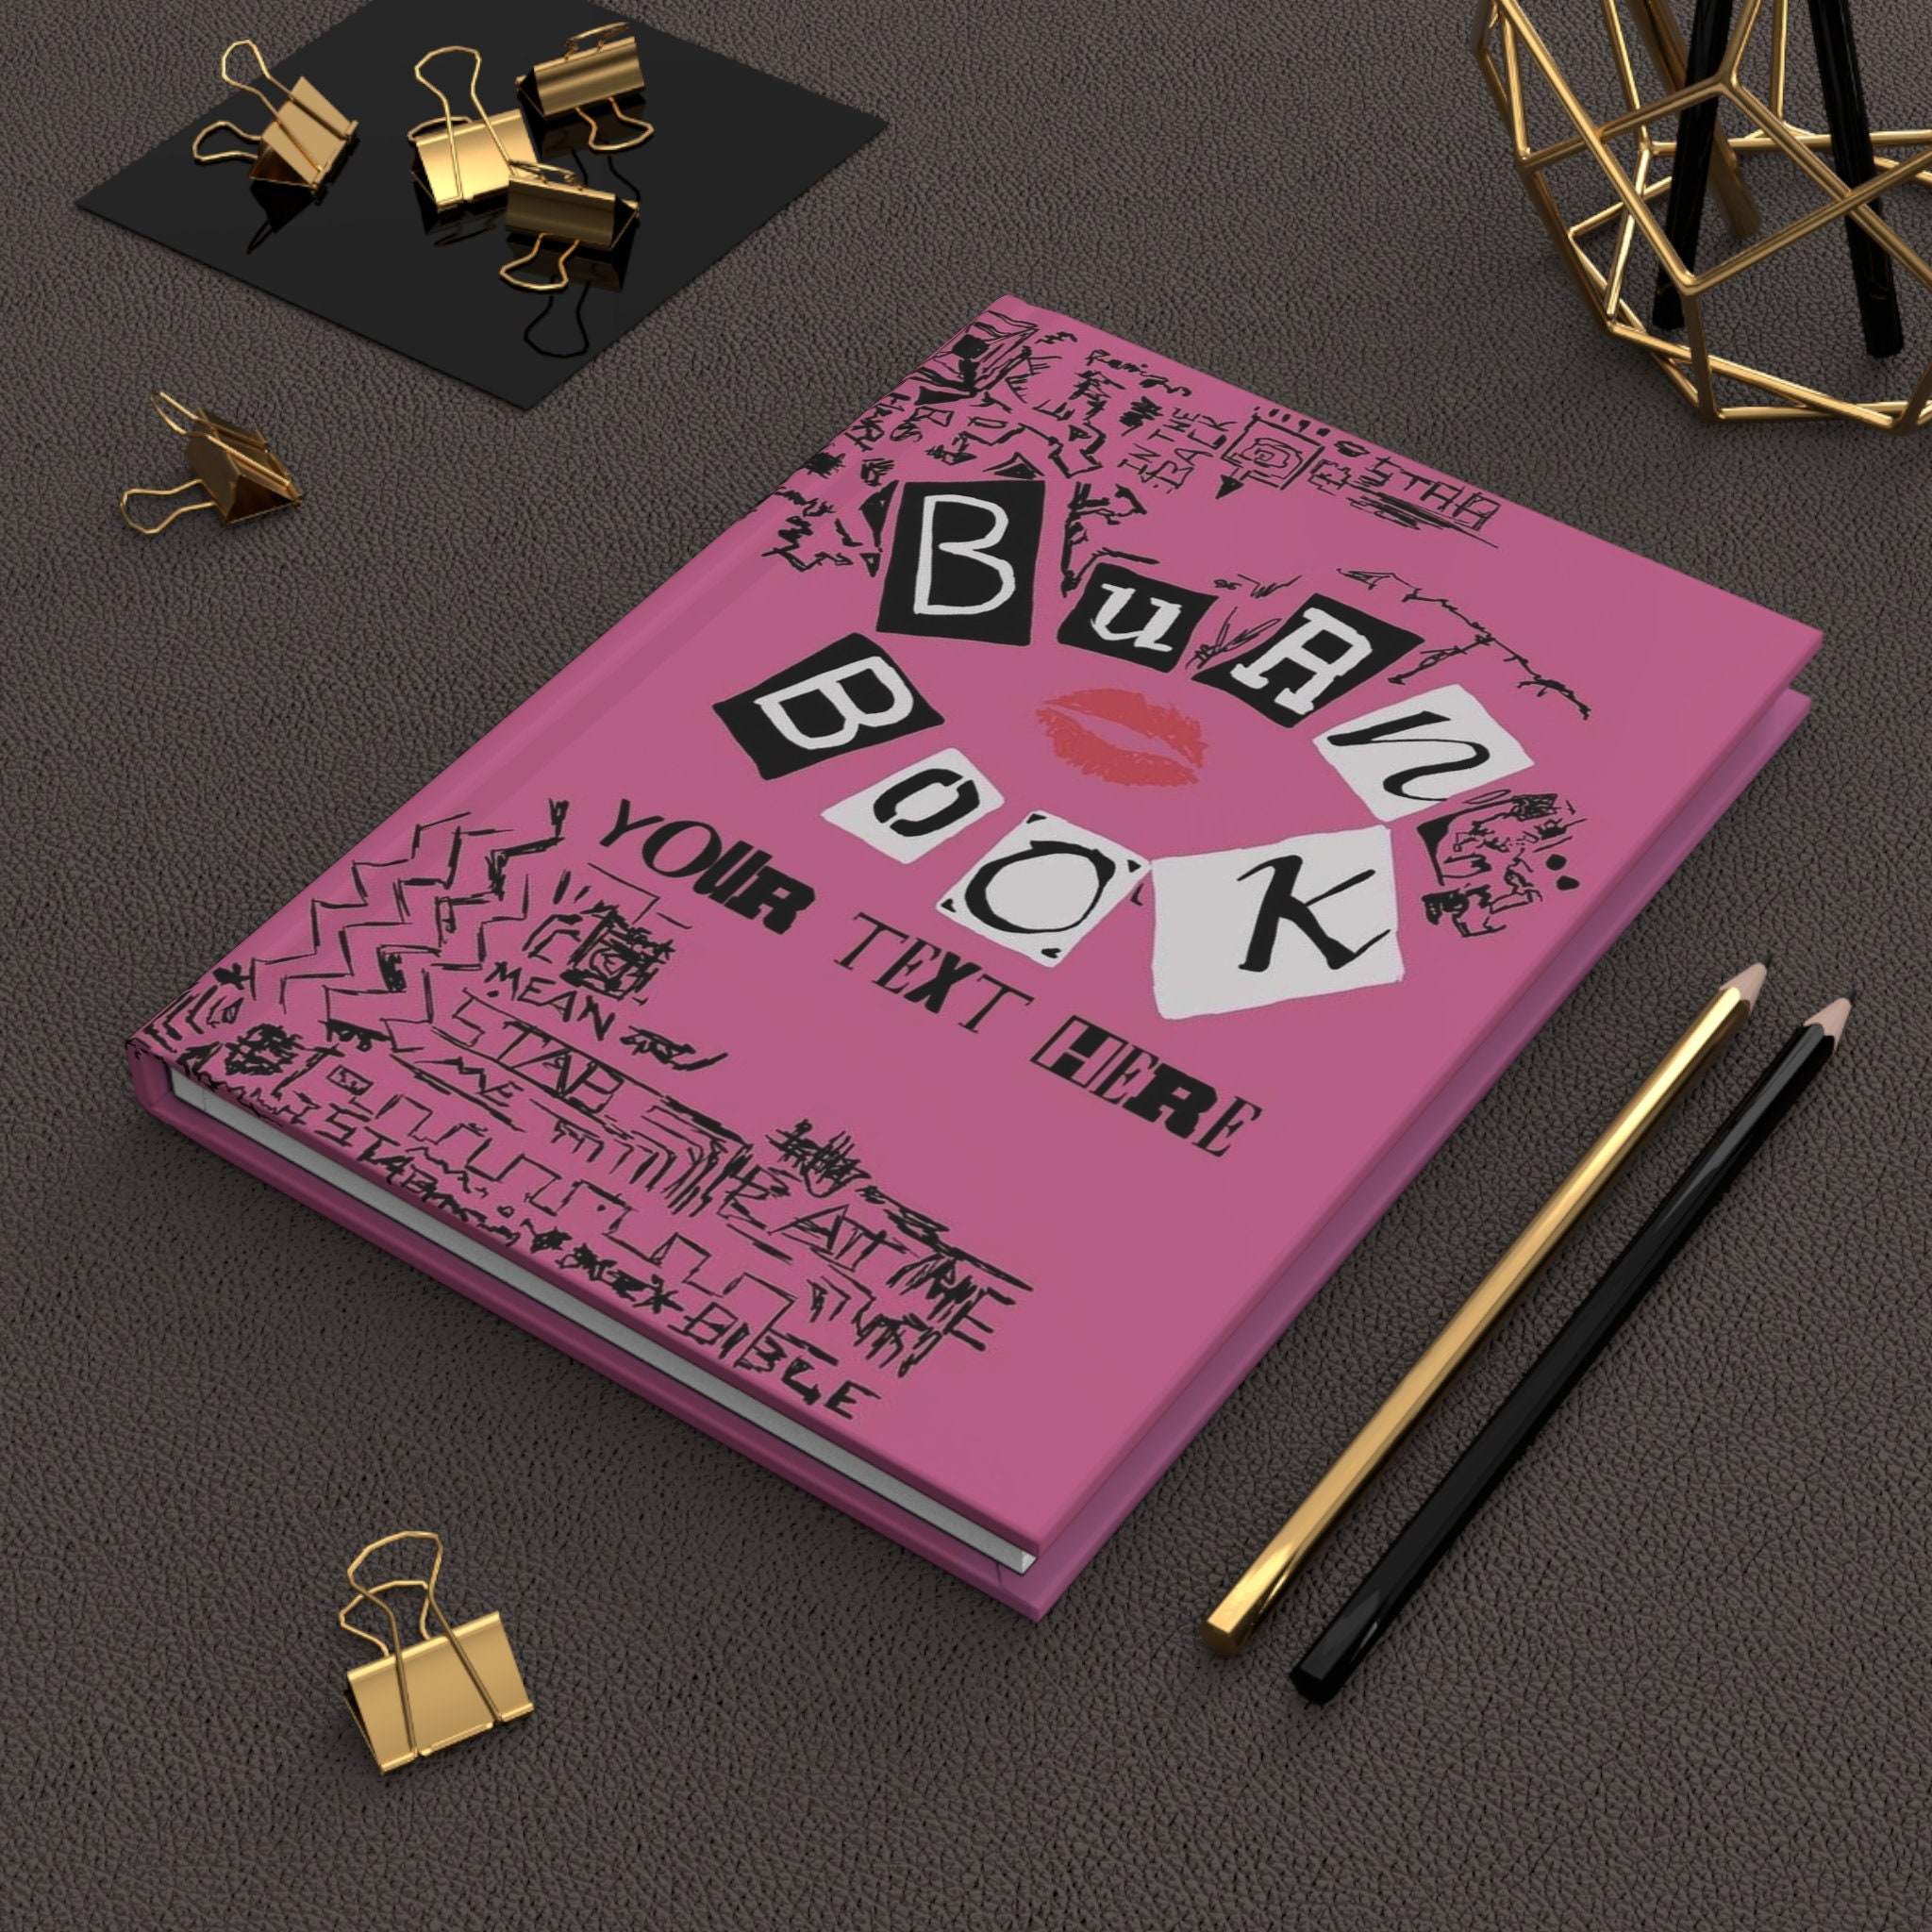 Mean Girls: Burn Book Scrapbook Set - Book Summary & Video